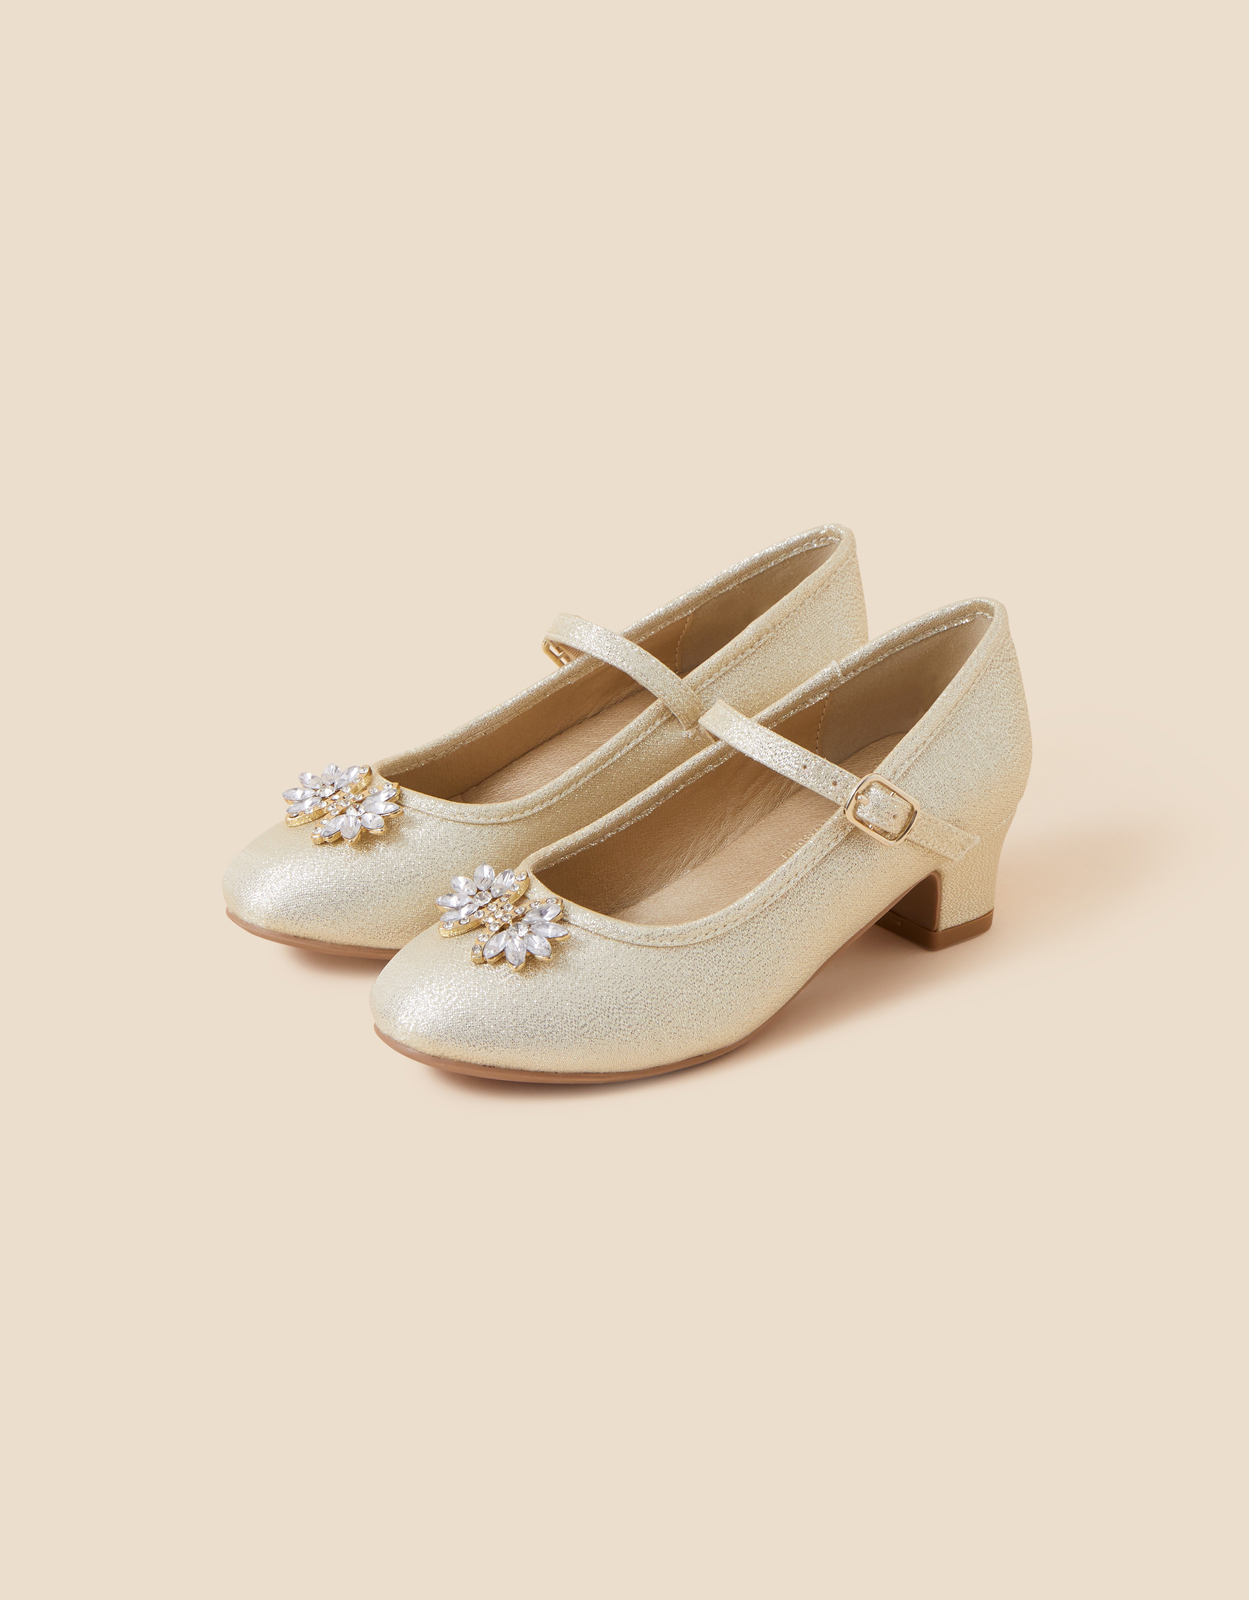 Accessorize Girl's Girls Shimmer Gem Flamenco Shoes Gold, Size: 8